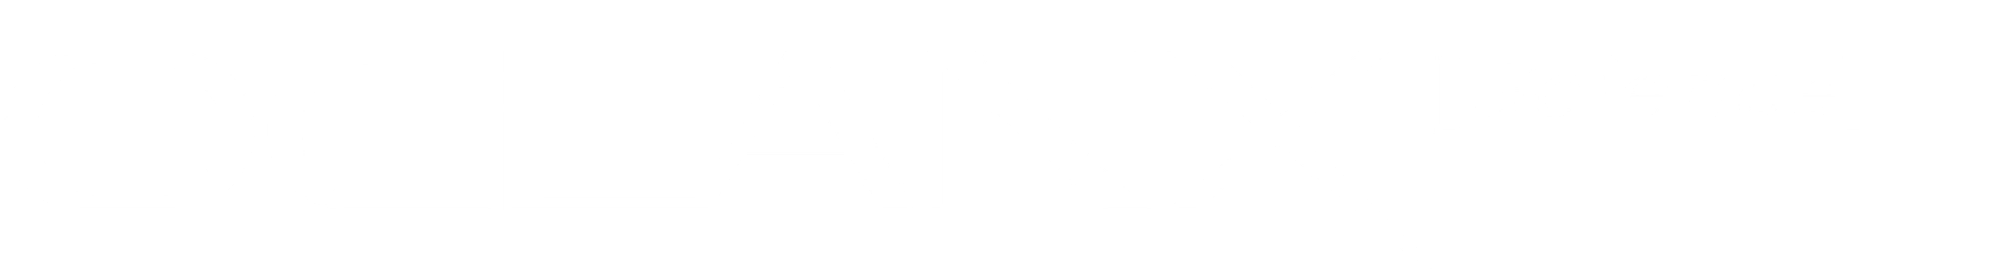 oceanx logo